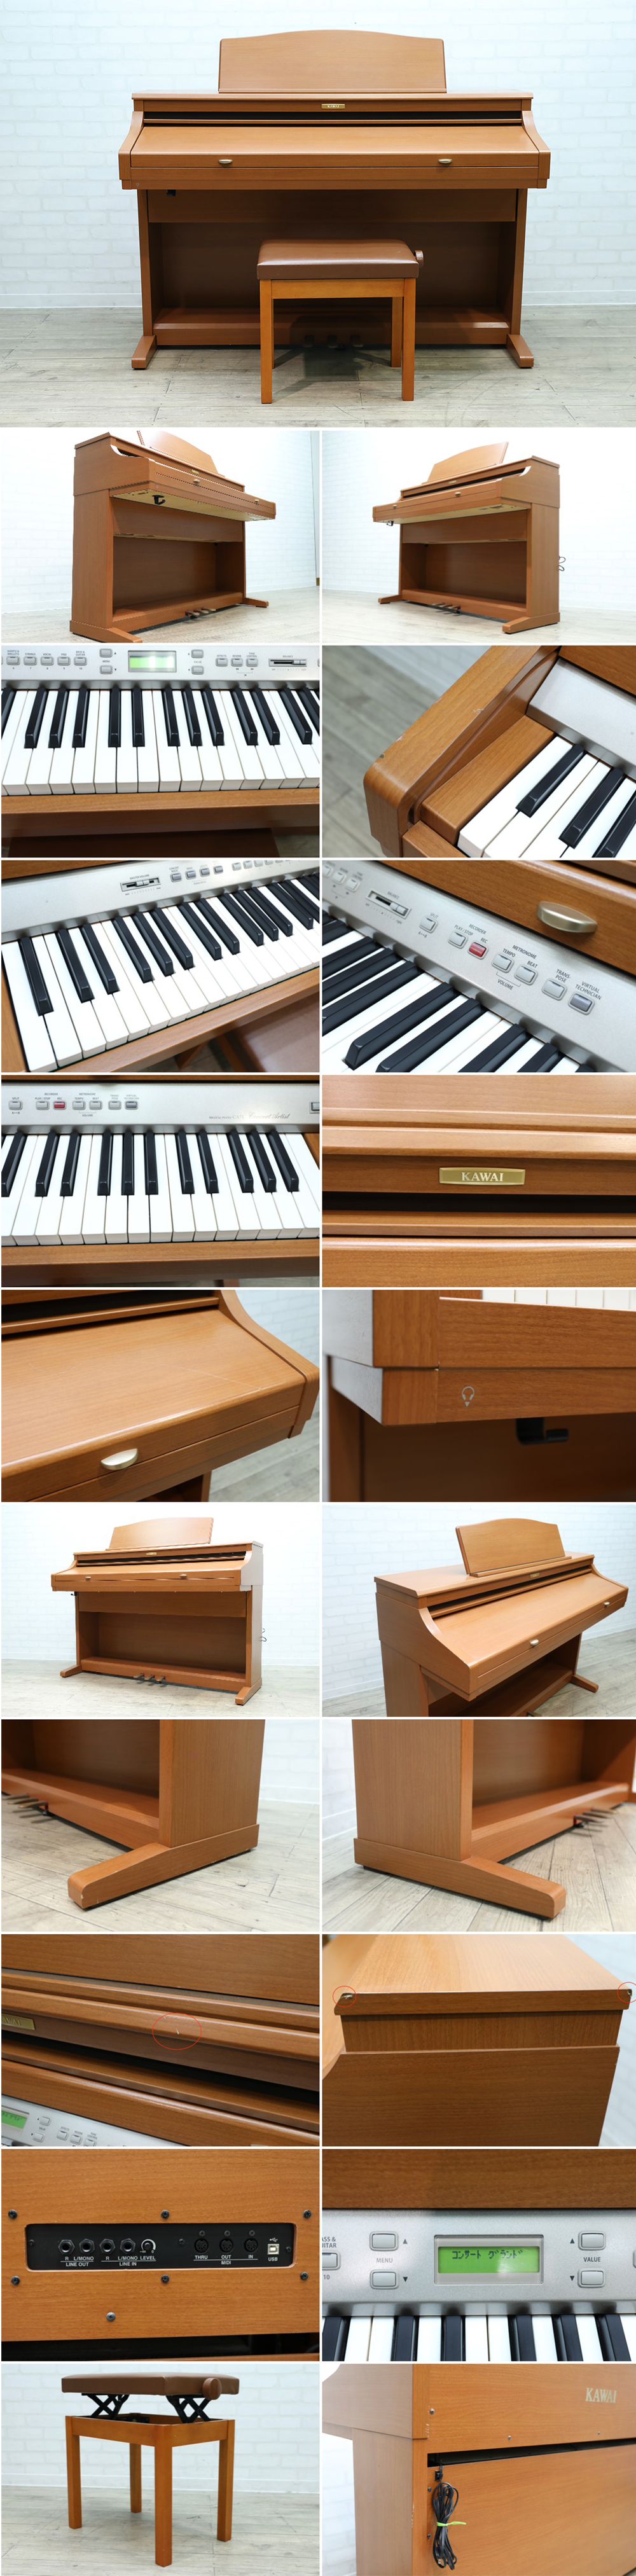 KAWAI 河合楽器 電子ピアノ デジタルピアノ CN29A 88鍵 F114